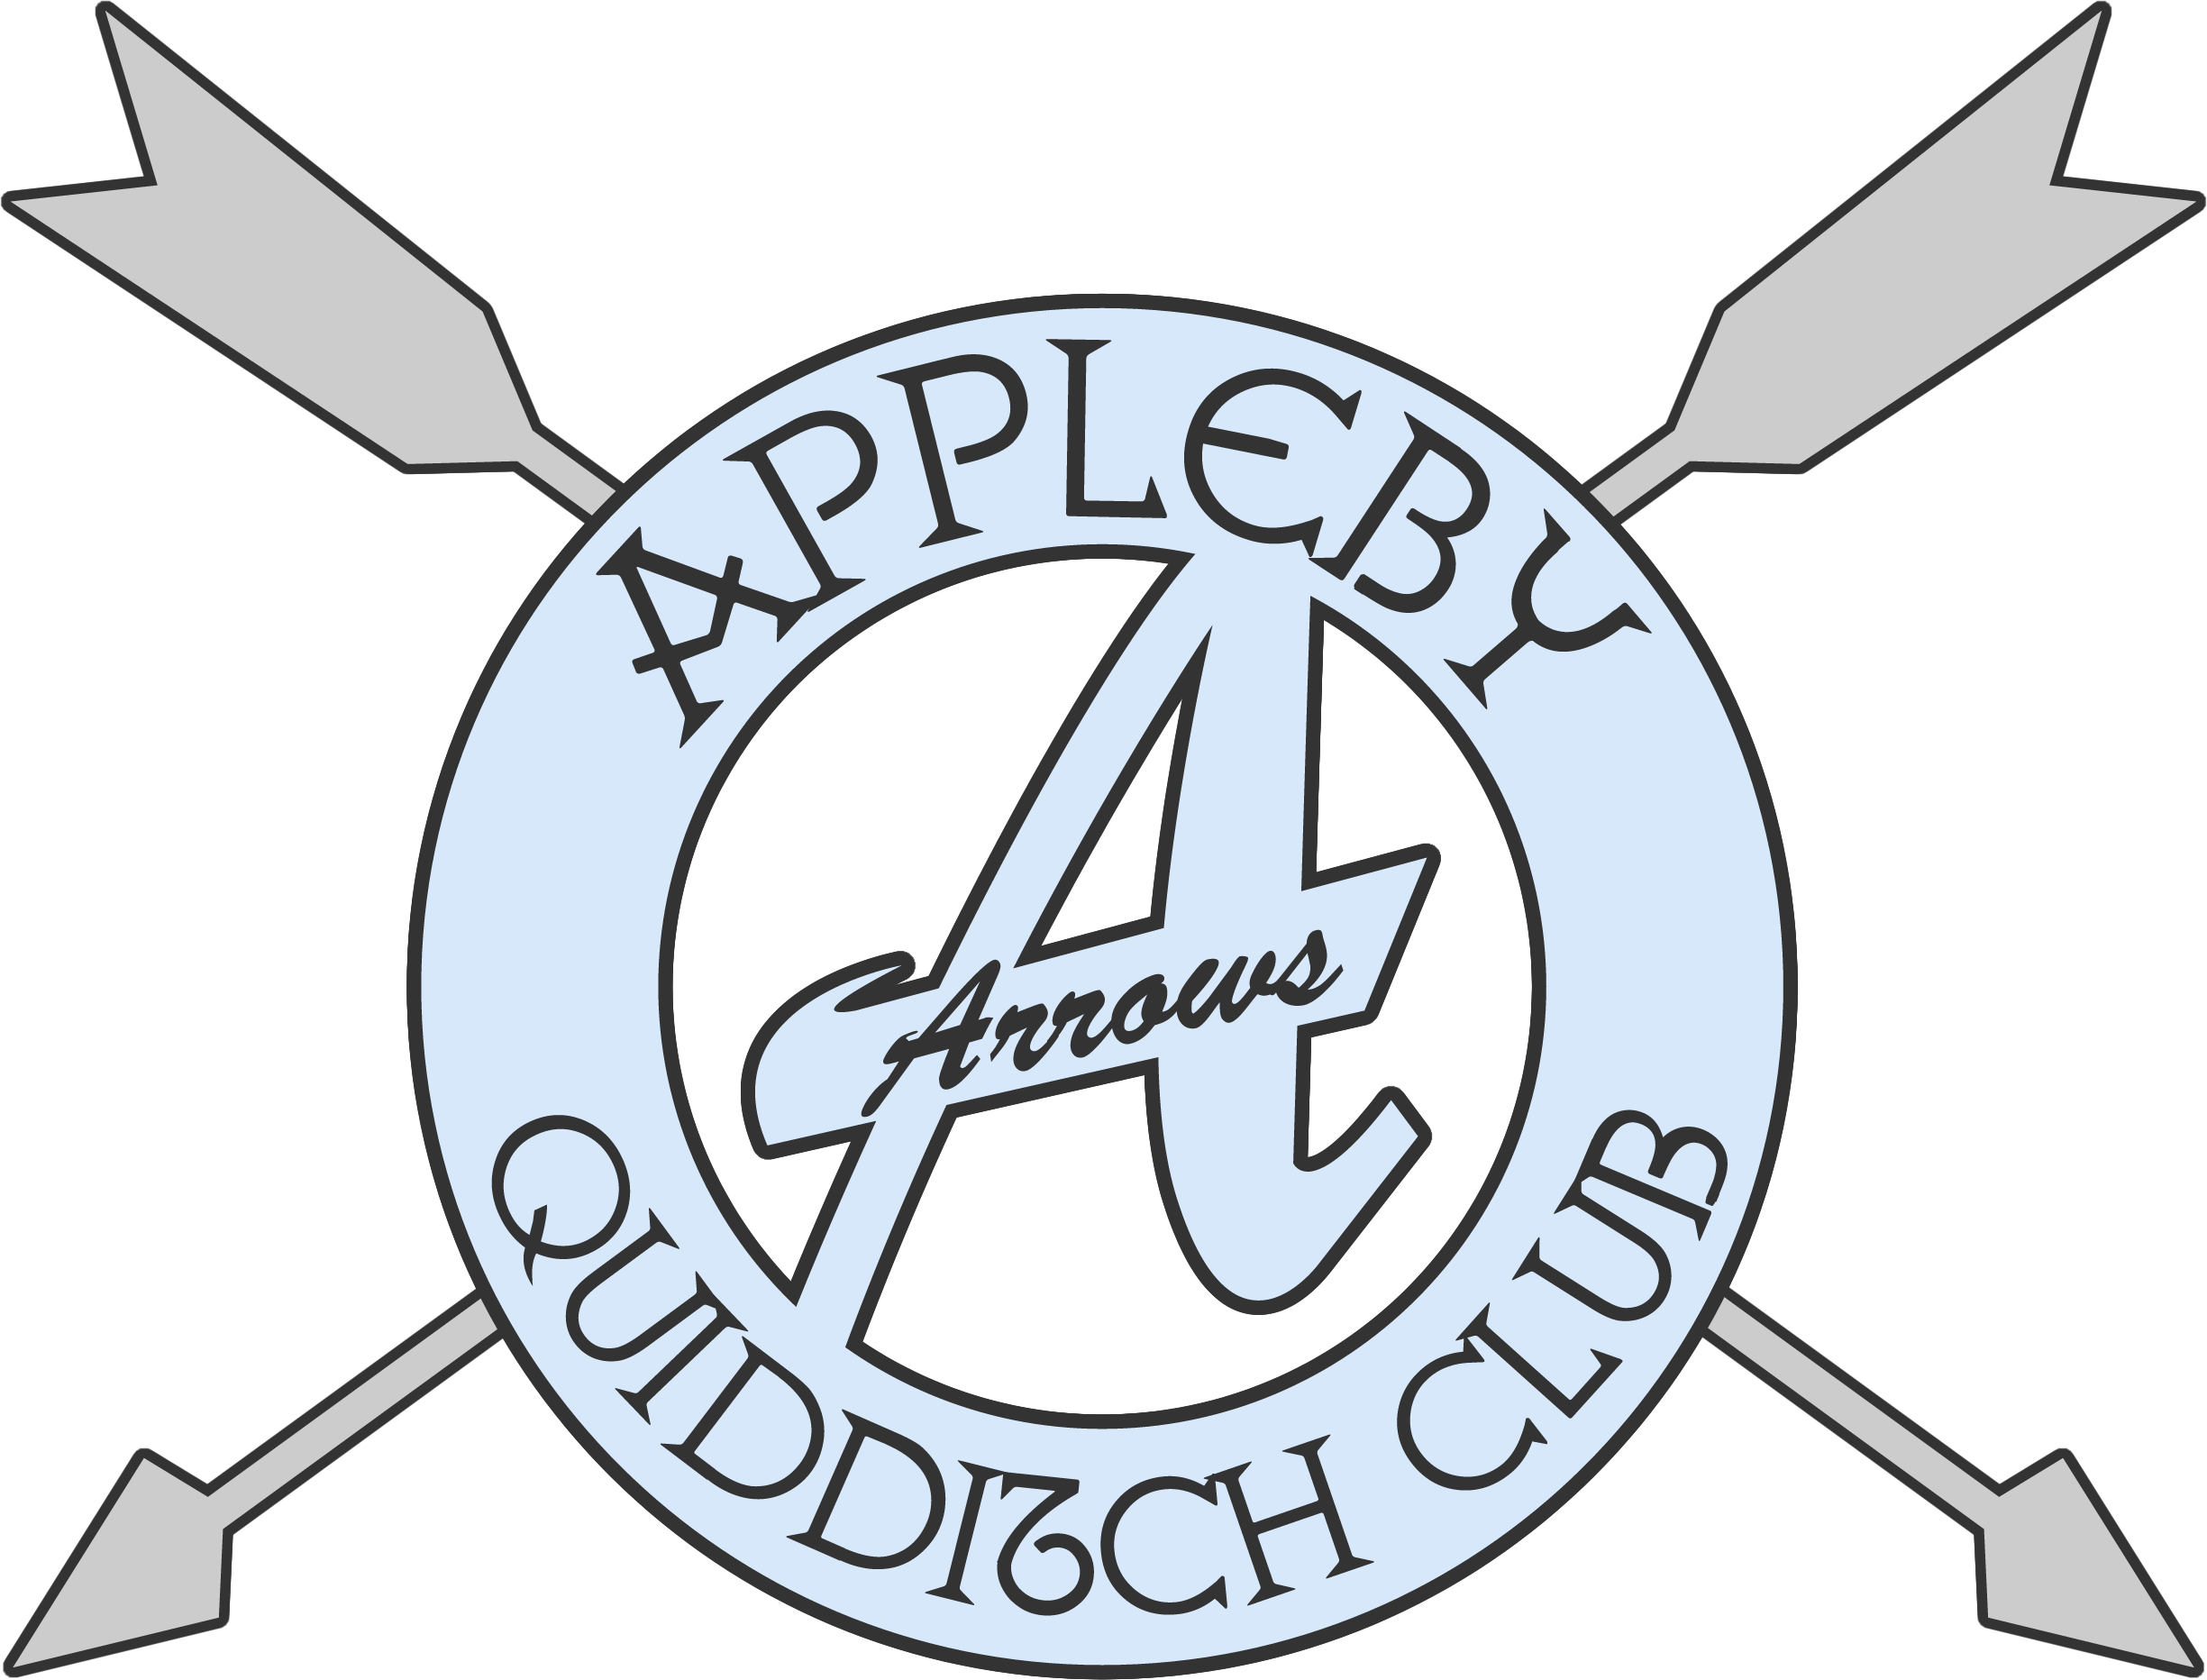 Appleby Arrows logo 1